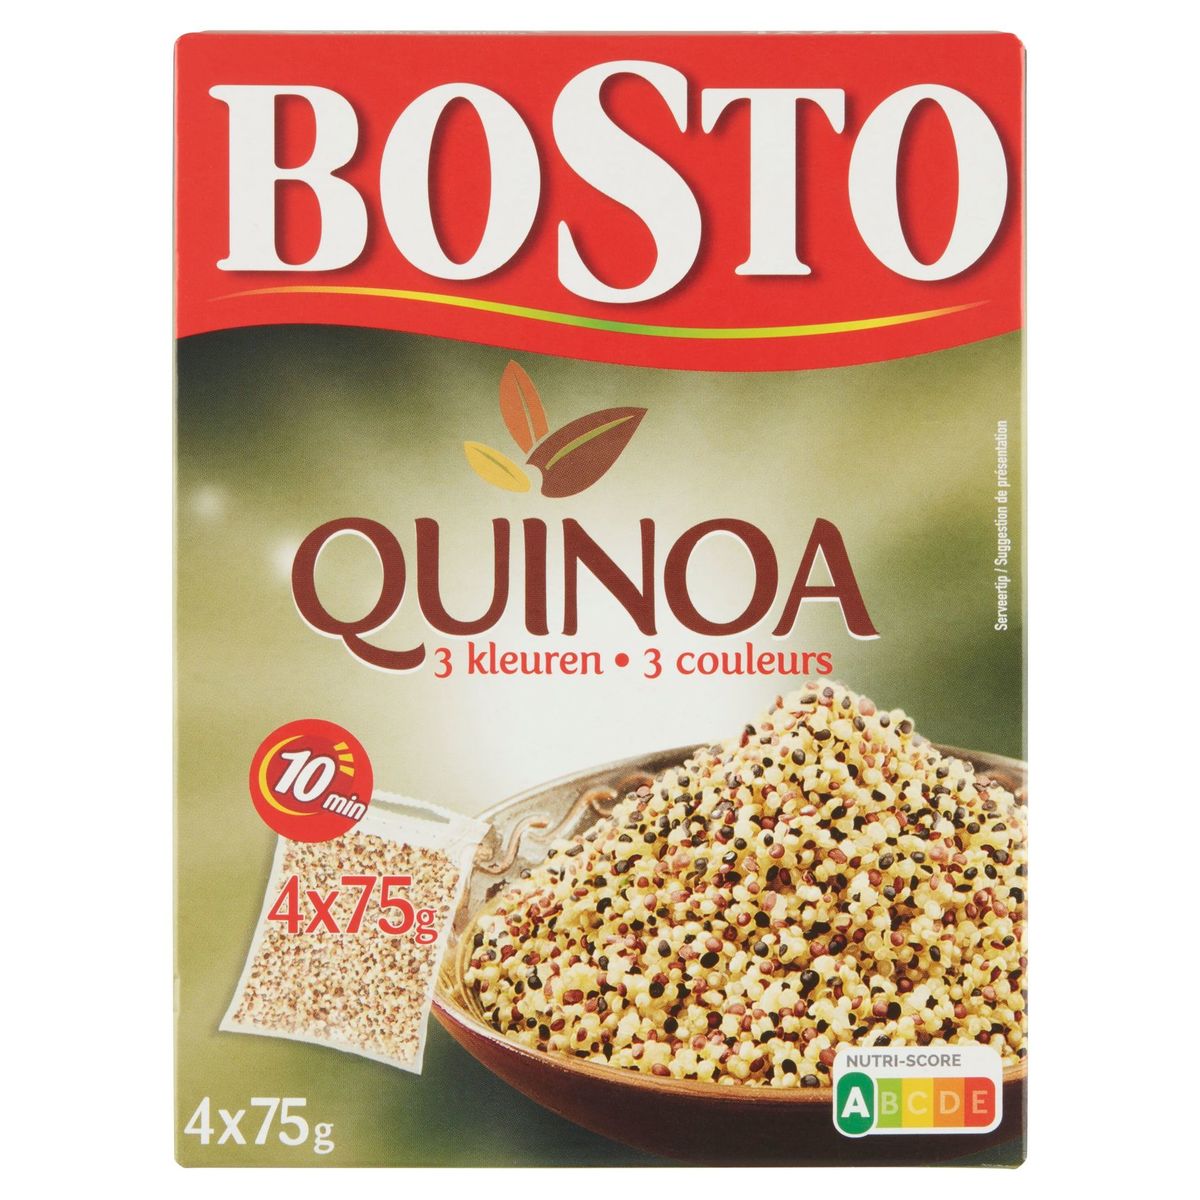 Bosto Quinoa 3 Couleurs 4 x 75 g